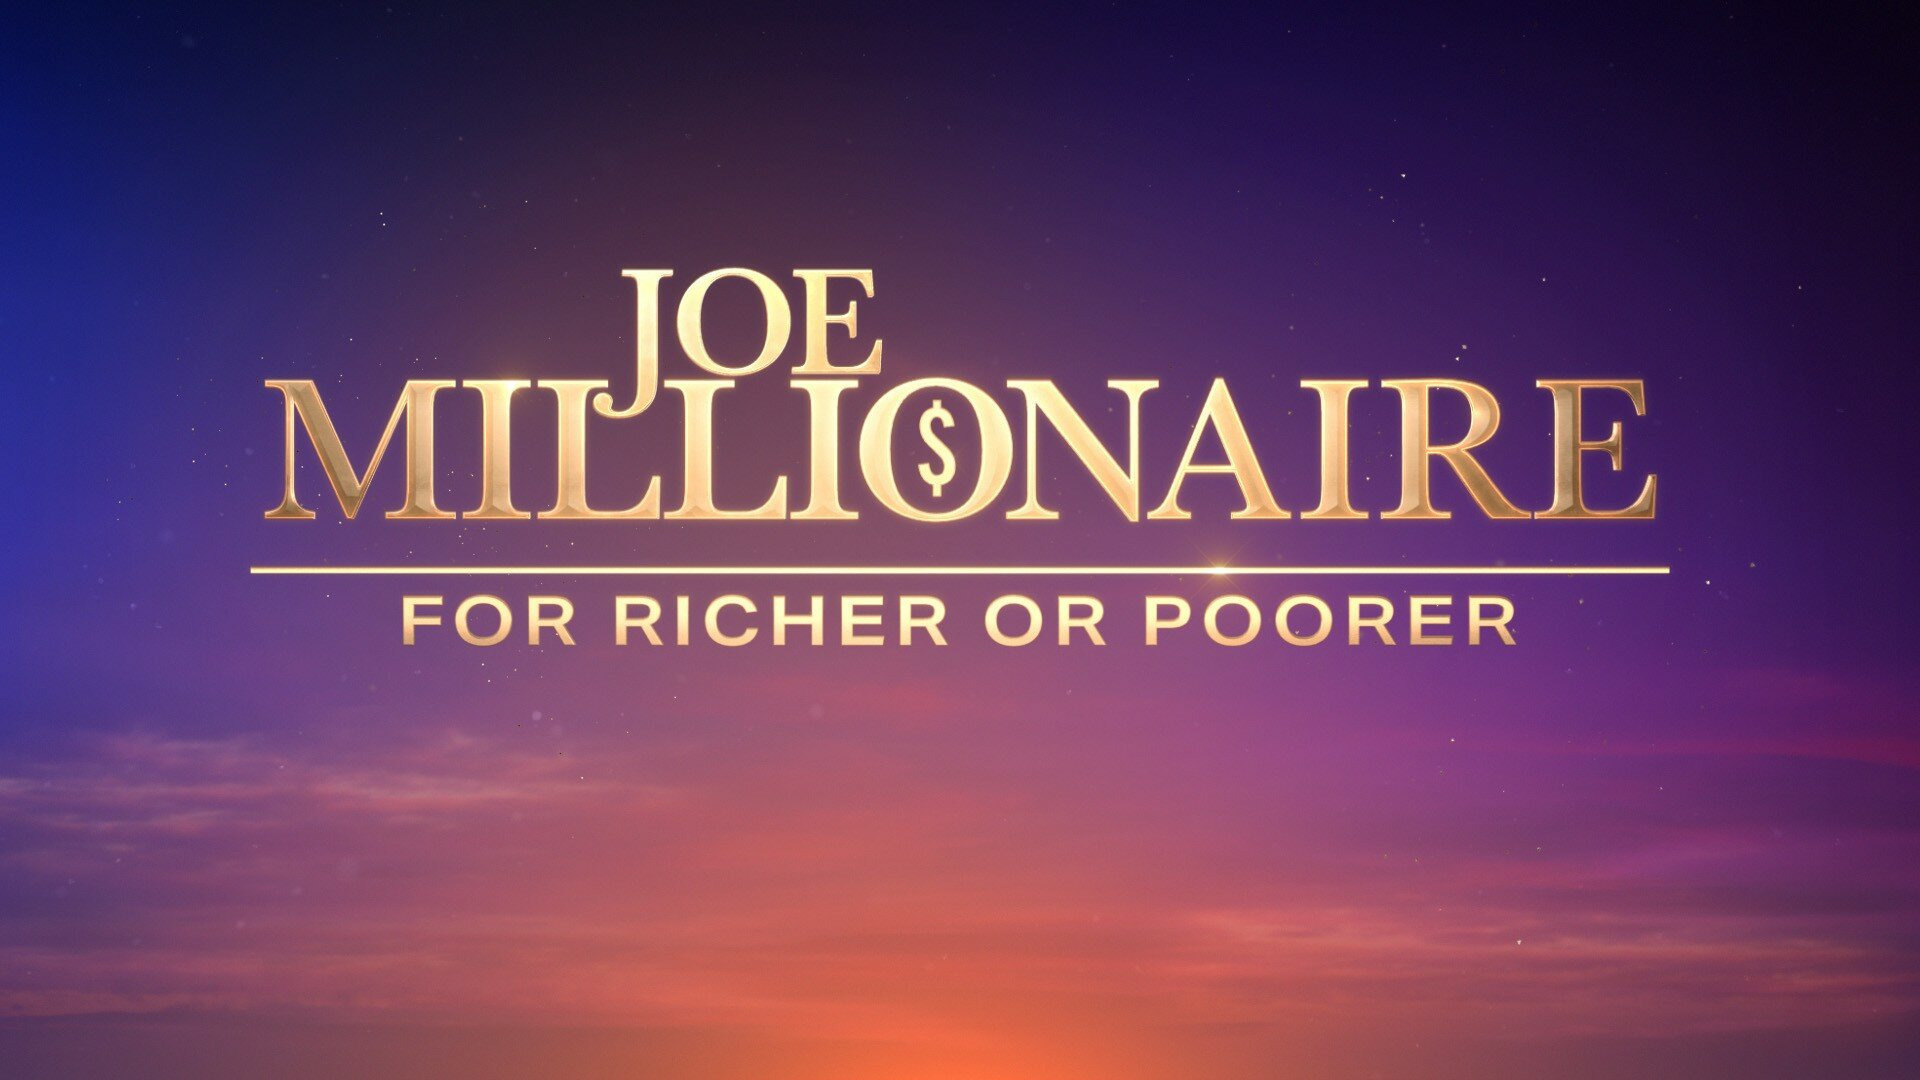 Show Joe Millionaire: For Richer or Poorer